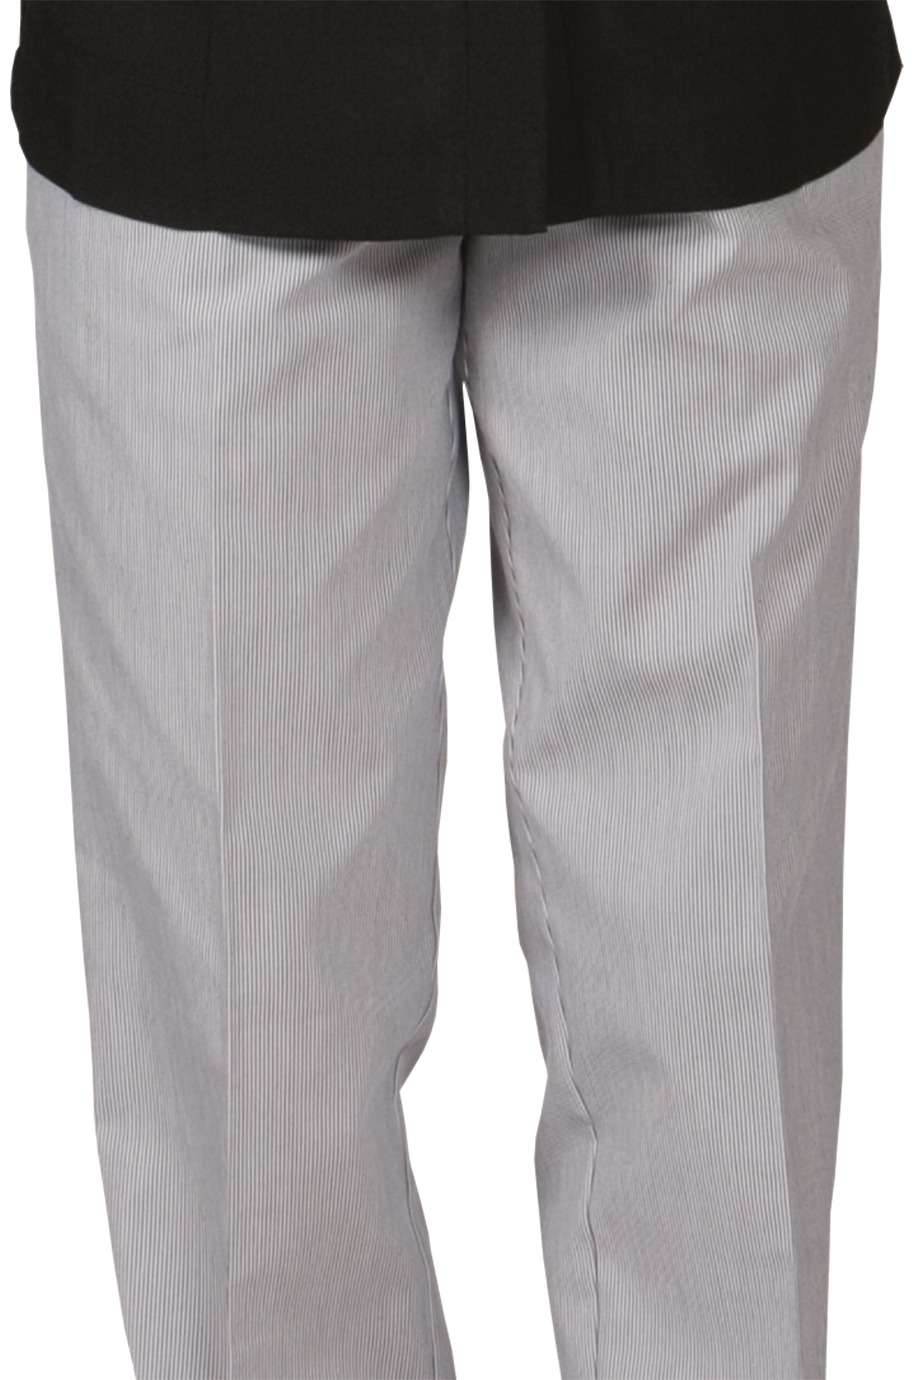 Edwards Garment 8895 - Women's Junior Cord Pull-On-Pant